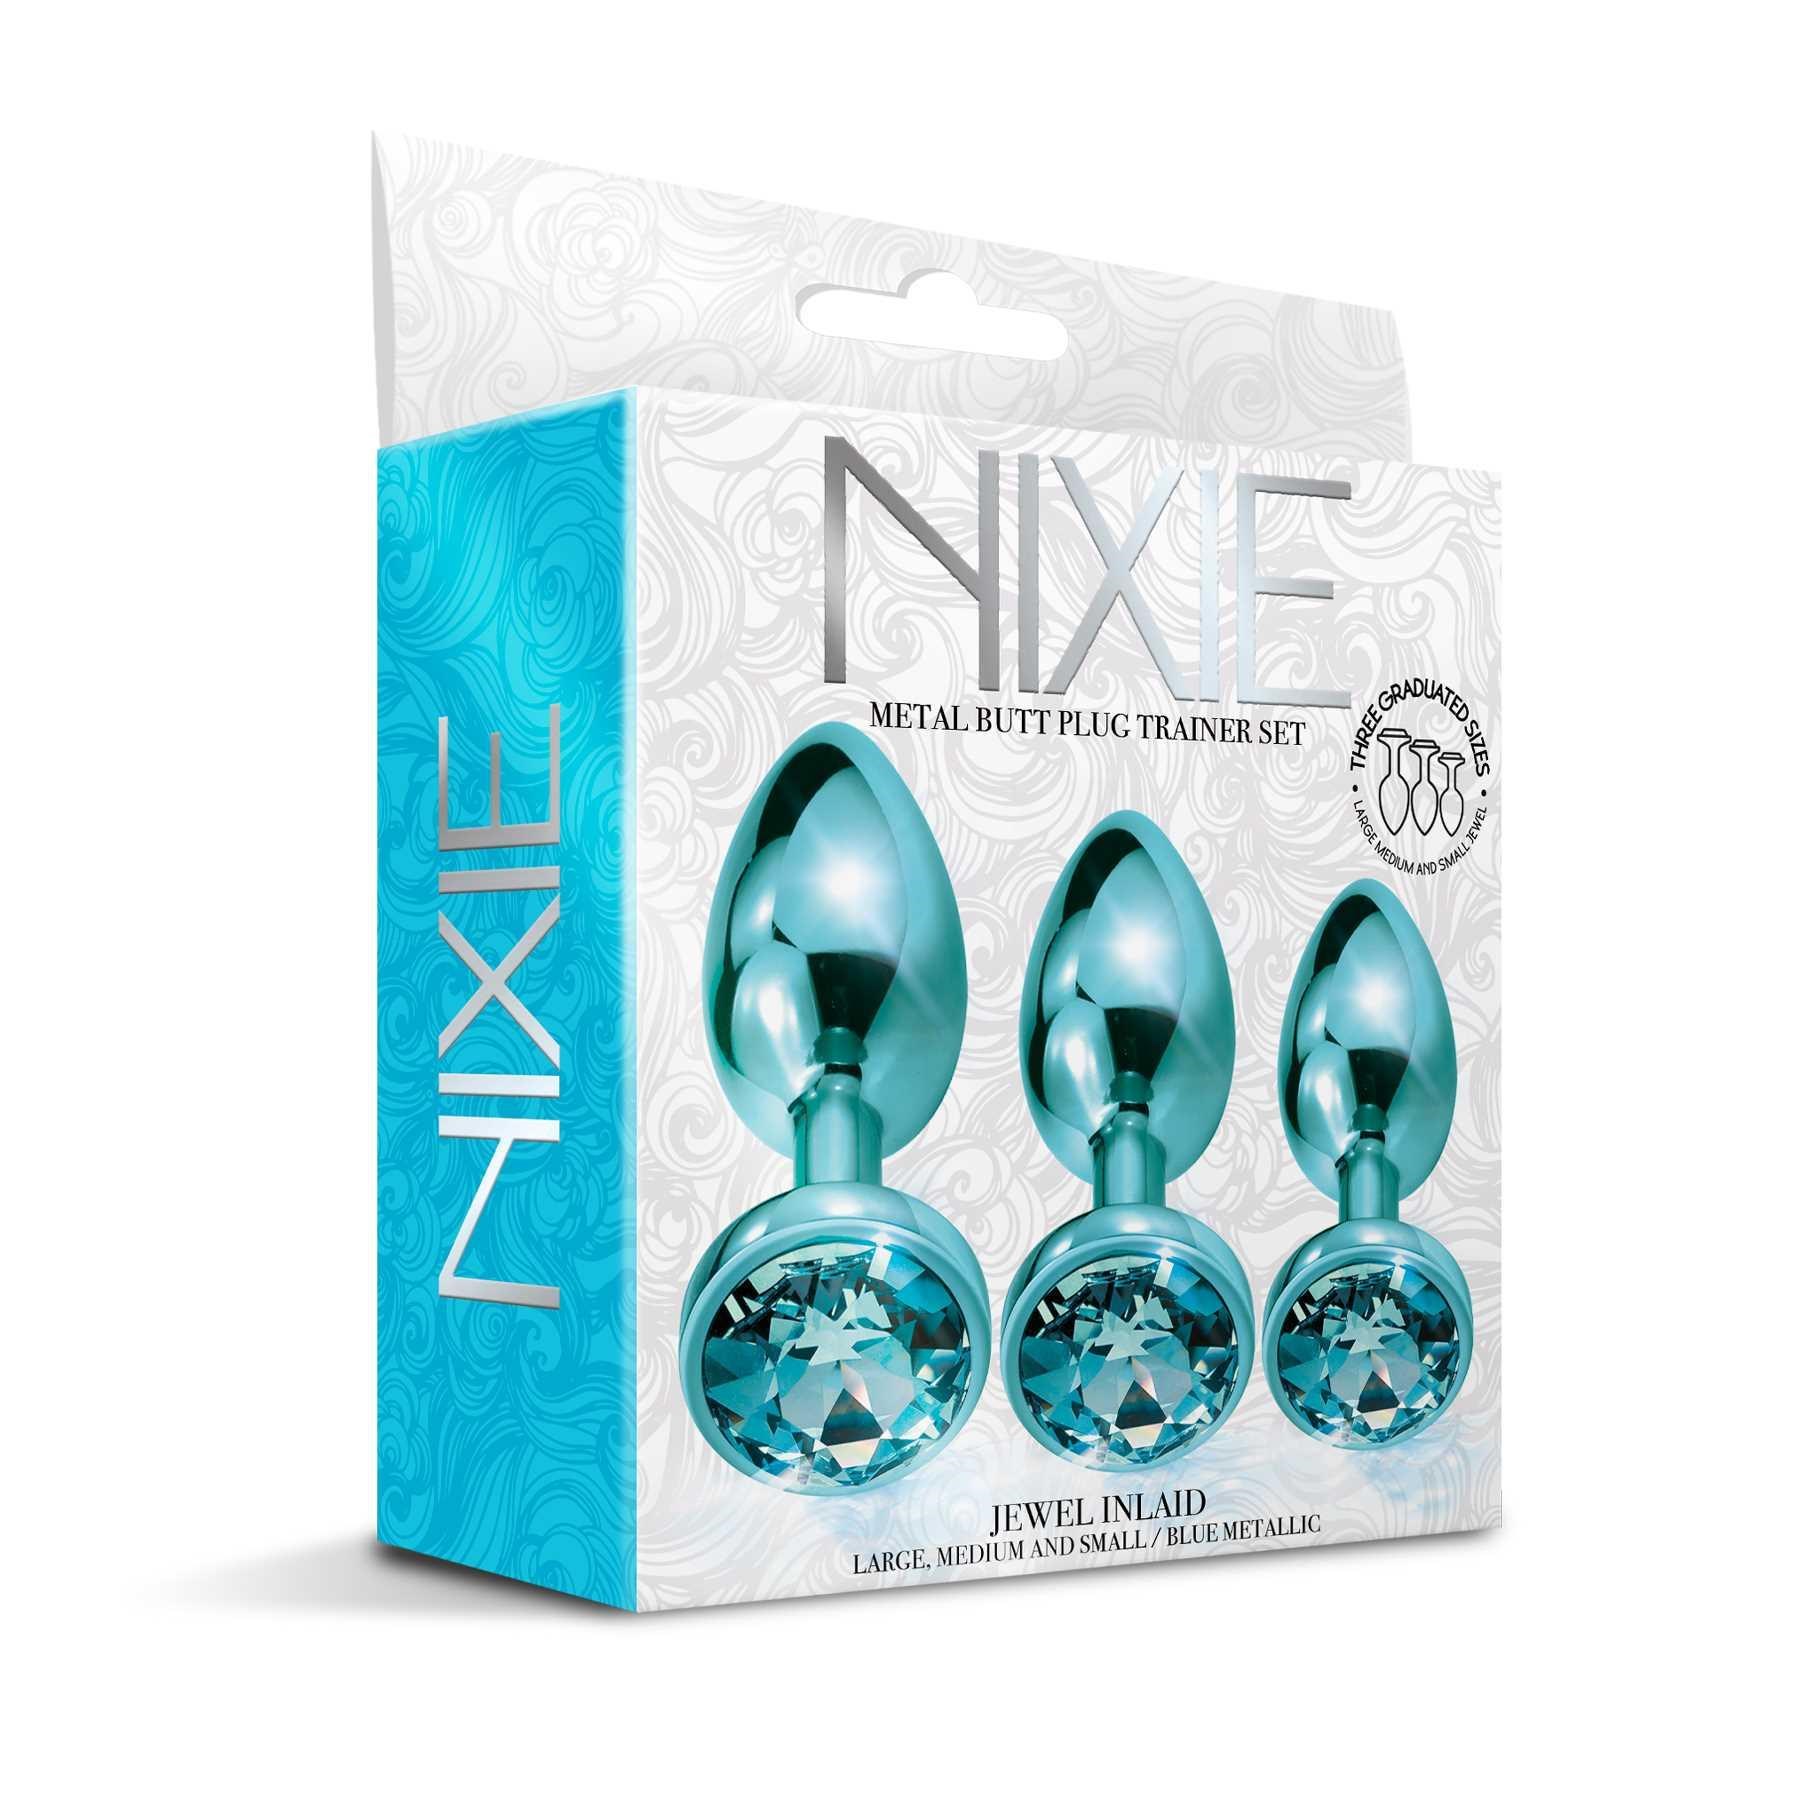 NIXIE Metal Butt Plug Trainer Set Metallic blue box